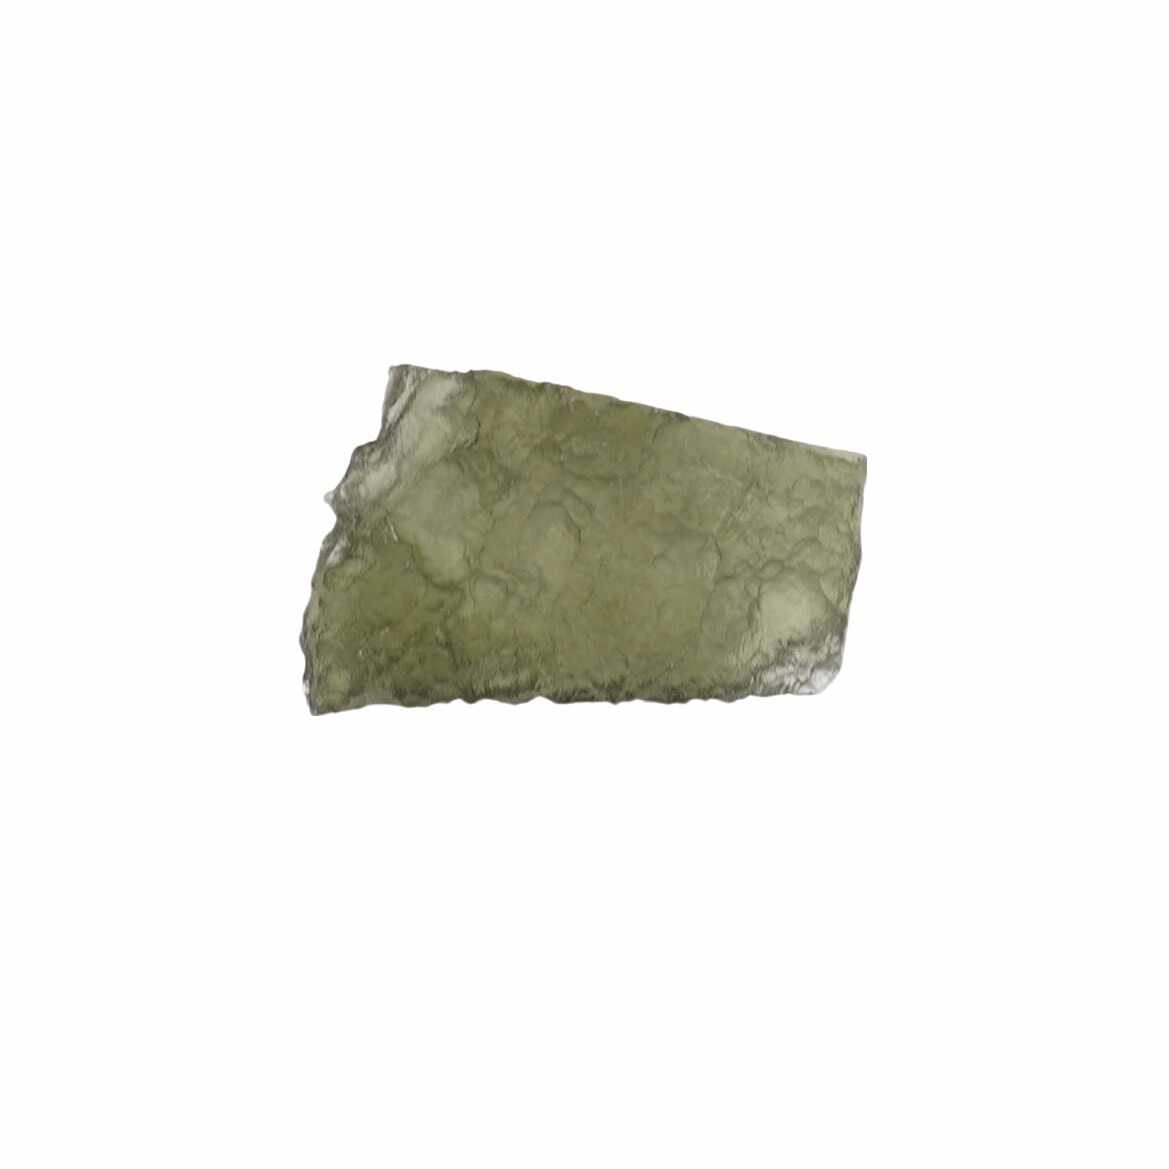 Moldavit cristal natural unicat a68